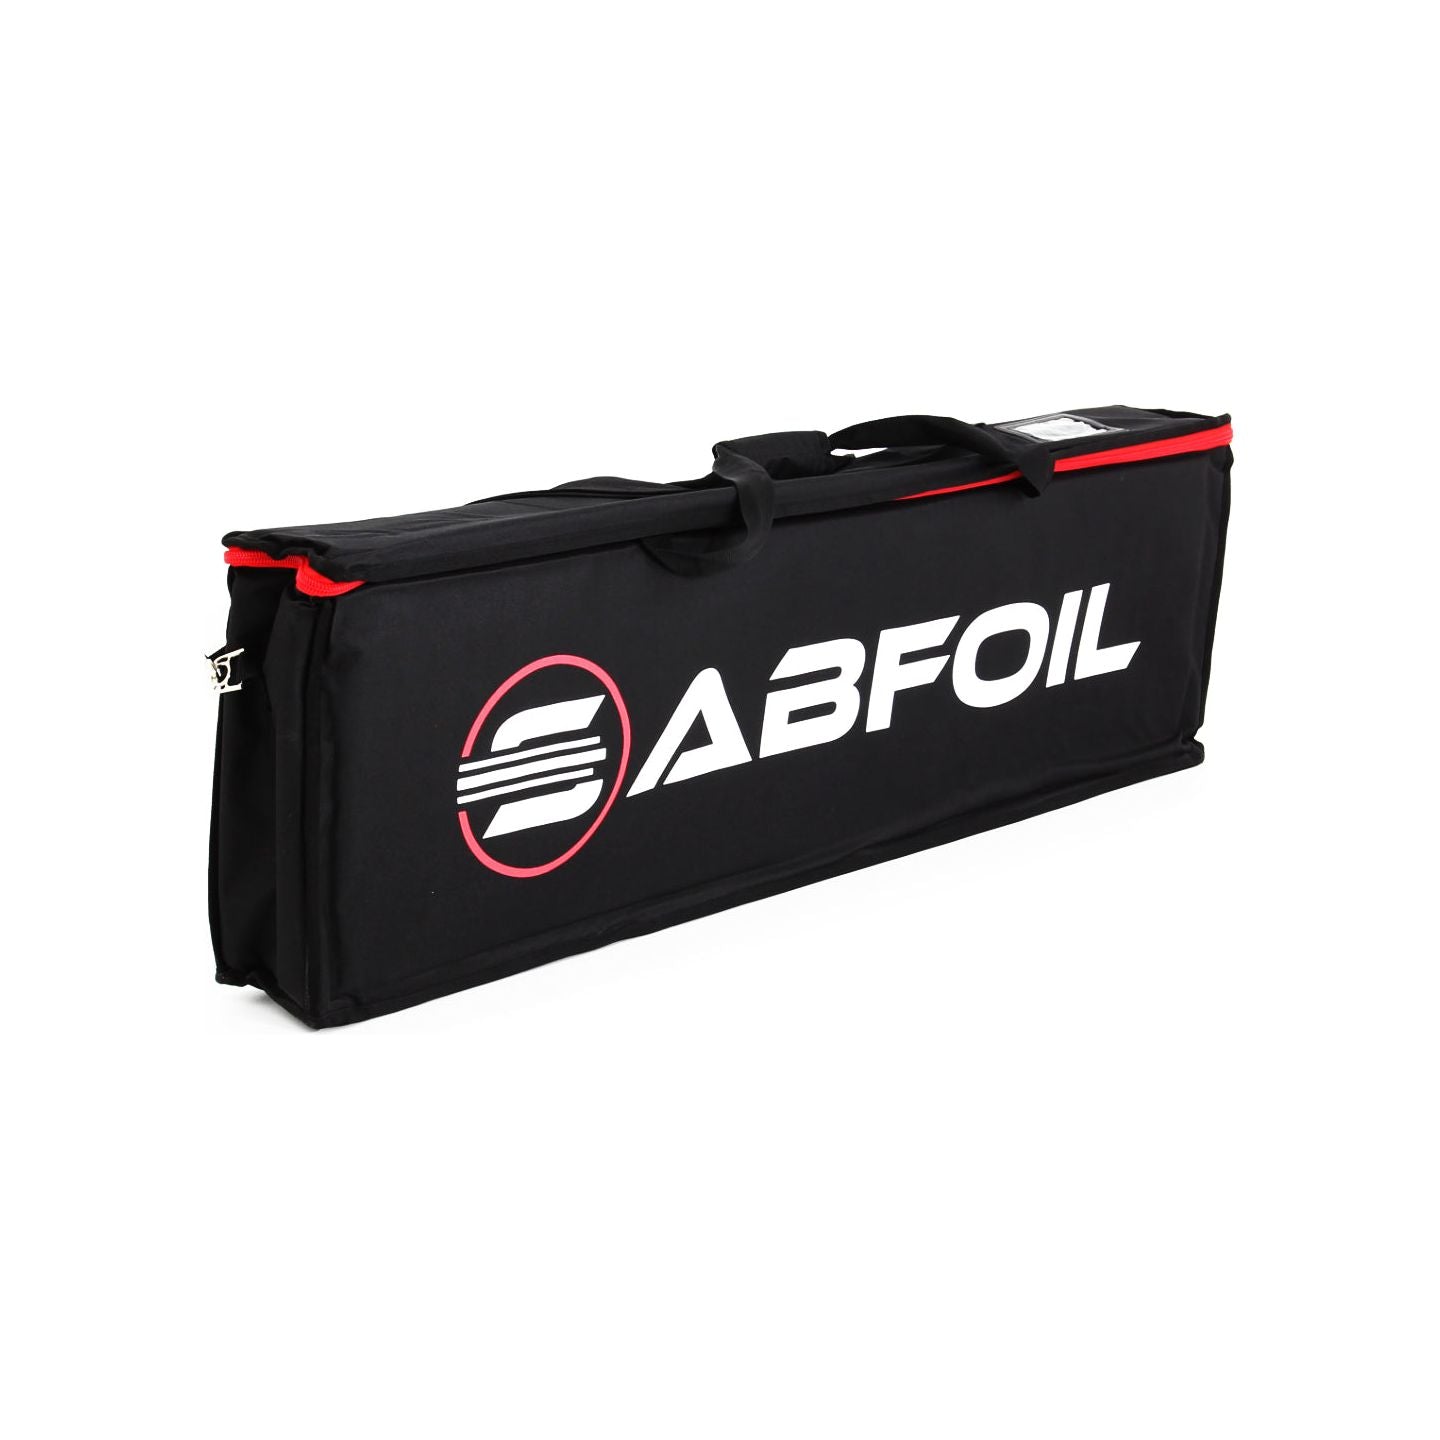 Sabfoil Razor Pro 875/76P | Hydrofoil Set